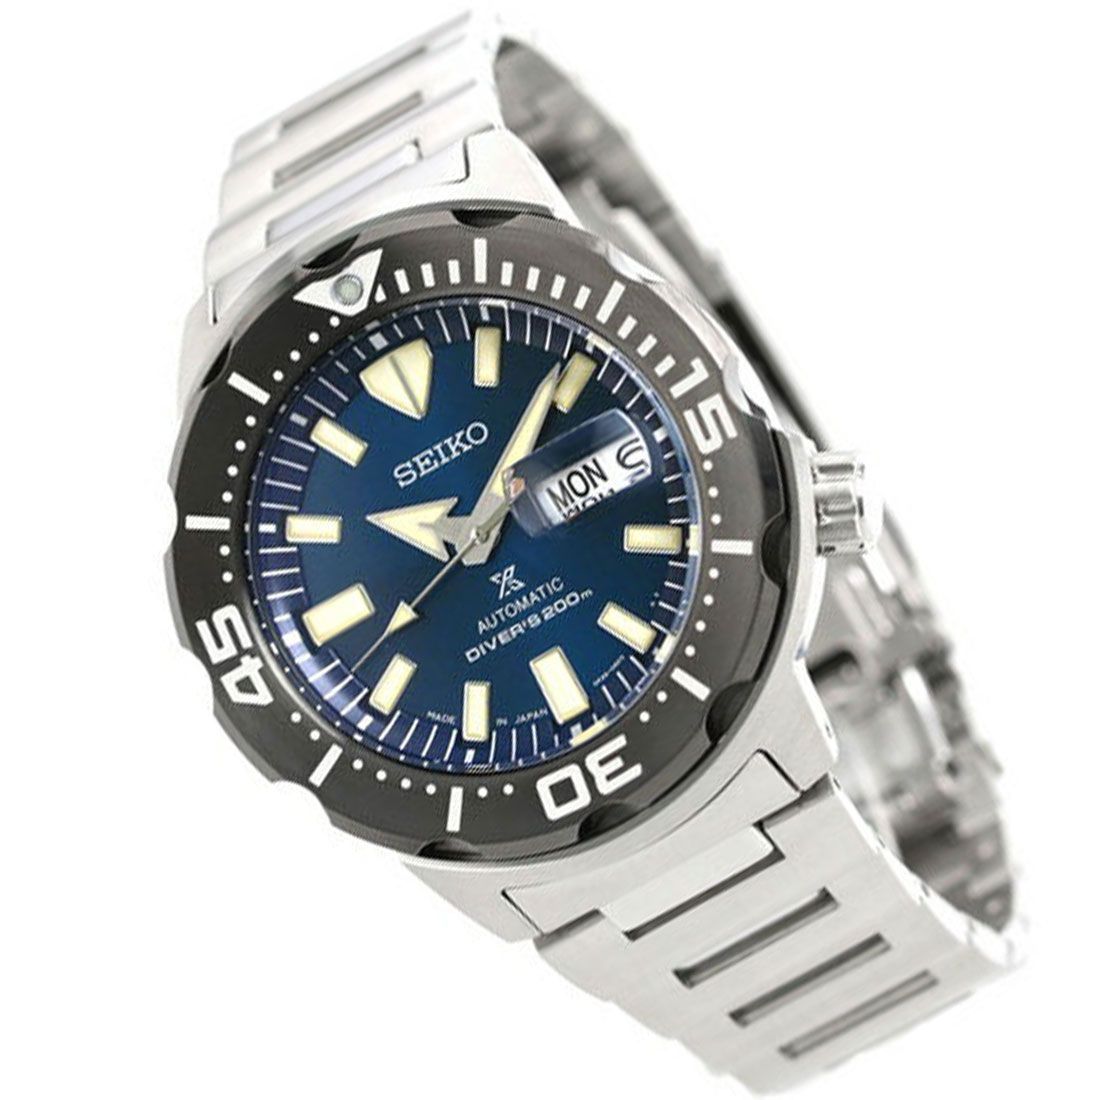 Seiko Prospex Automatic 24 Jewels Watch SBDY033 (BACKORDER) -Seiko